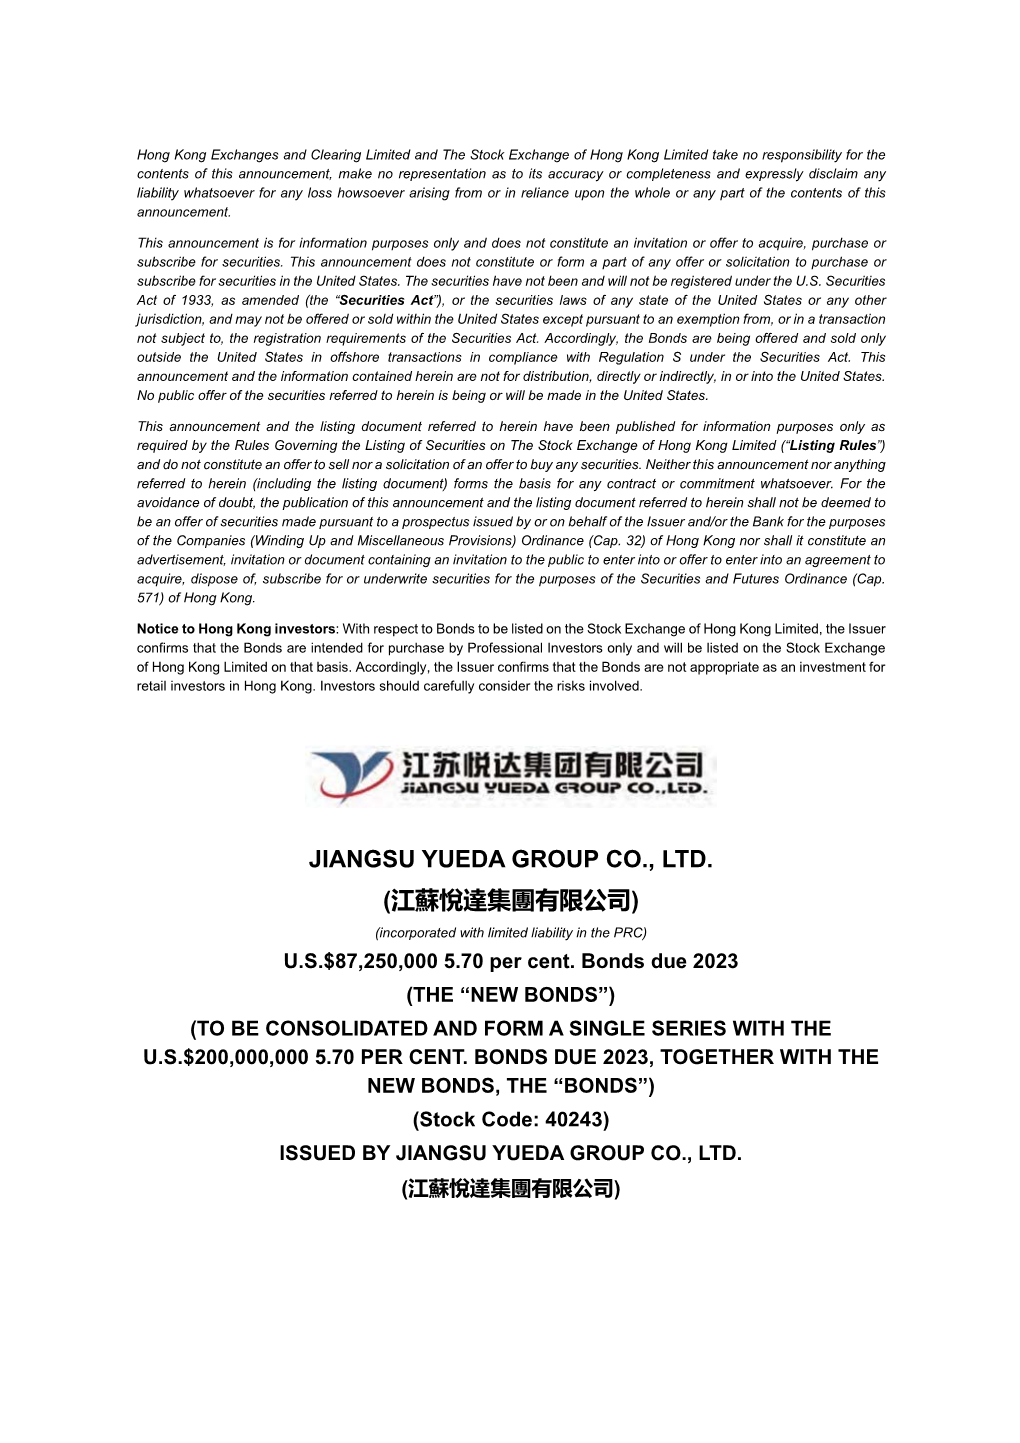 JIANGSU YUEDA GROUP CO., LTD. (江蘇悅達集團有限公司 ) (Incorporated with Limited Liability in the PRC) U.S.$87,250,000 5.70 Per Cent